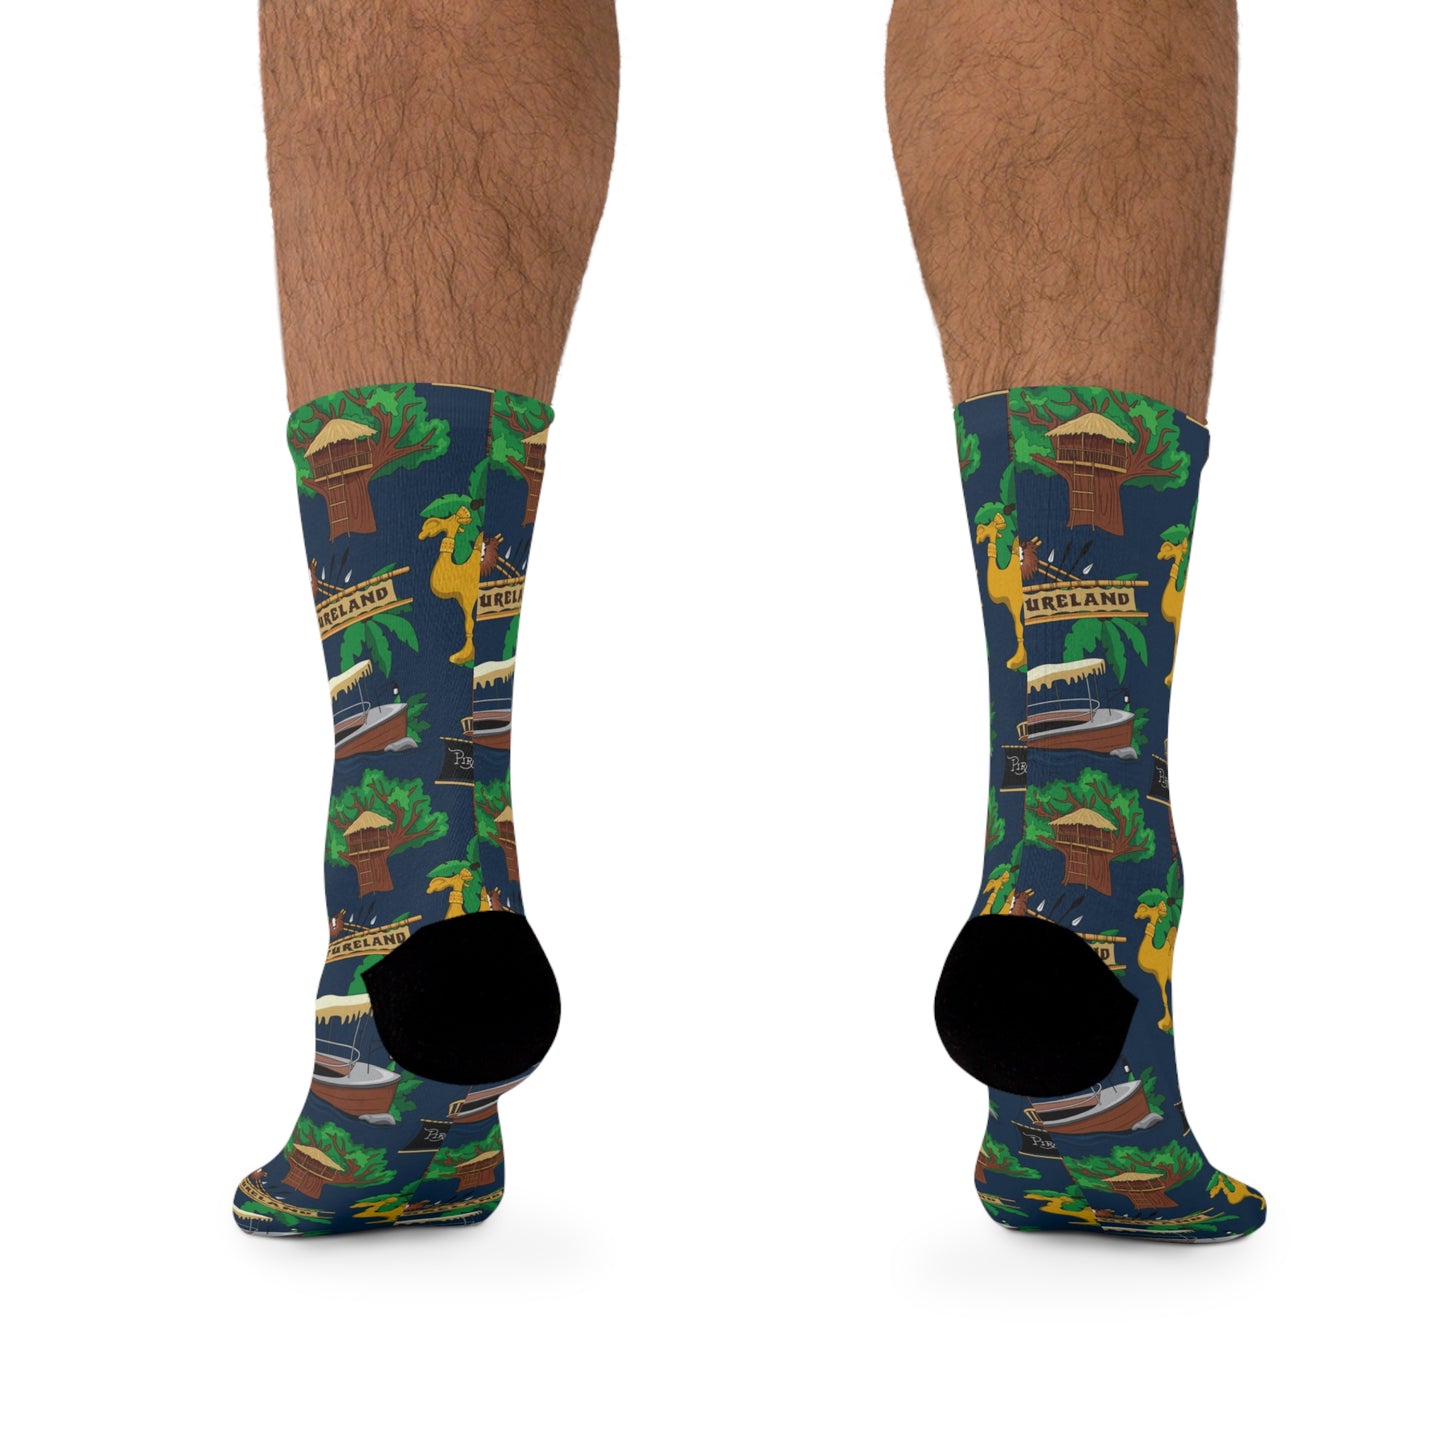 Adventureland Socks